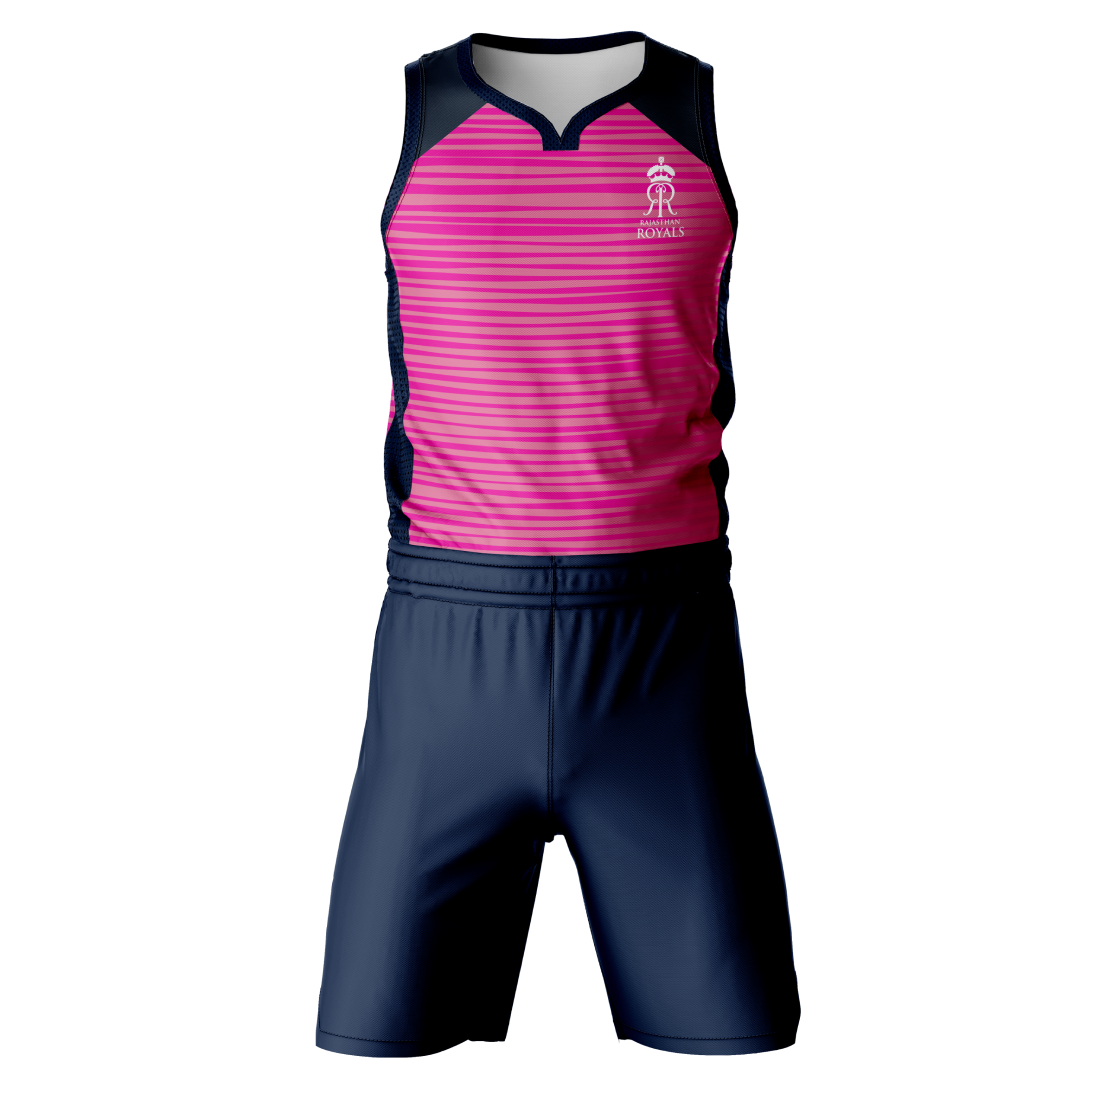 Next Print Ipl Rajasthan Design Basketball Jersey With Shorts